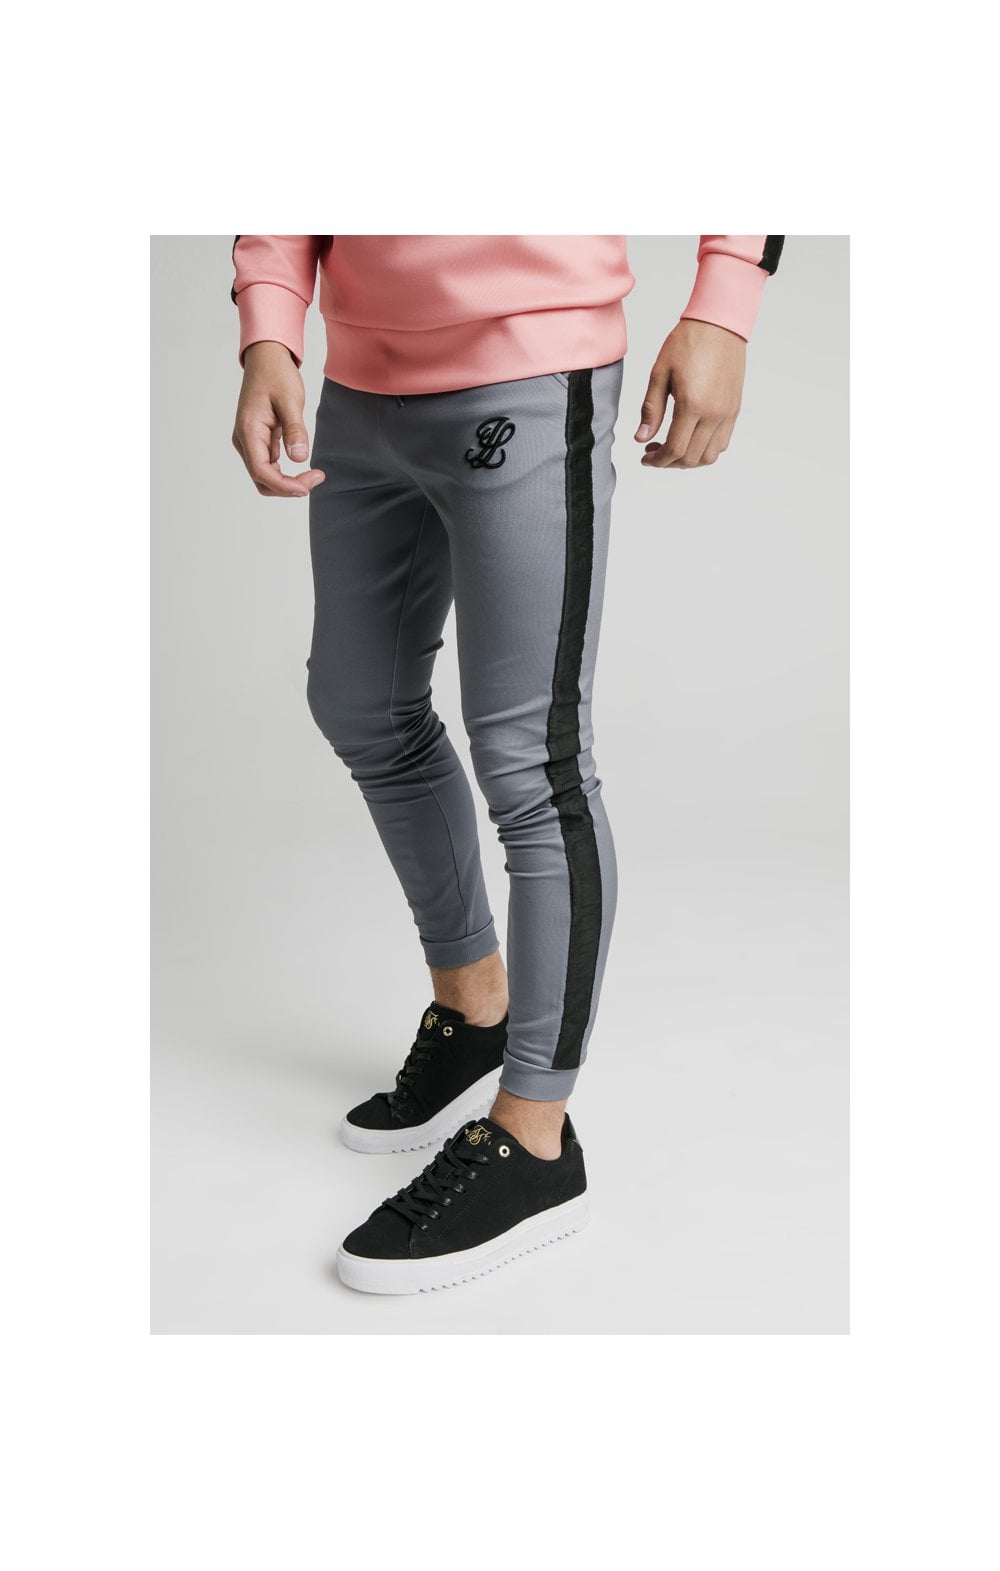 Illusive London Athlete Pants - Grey